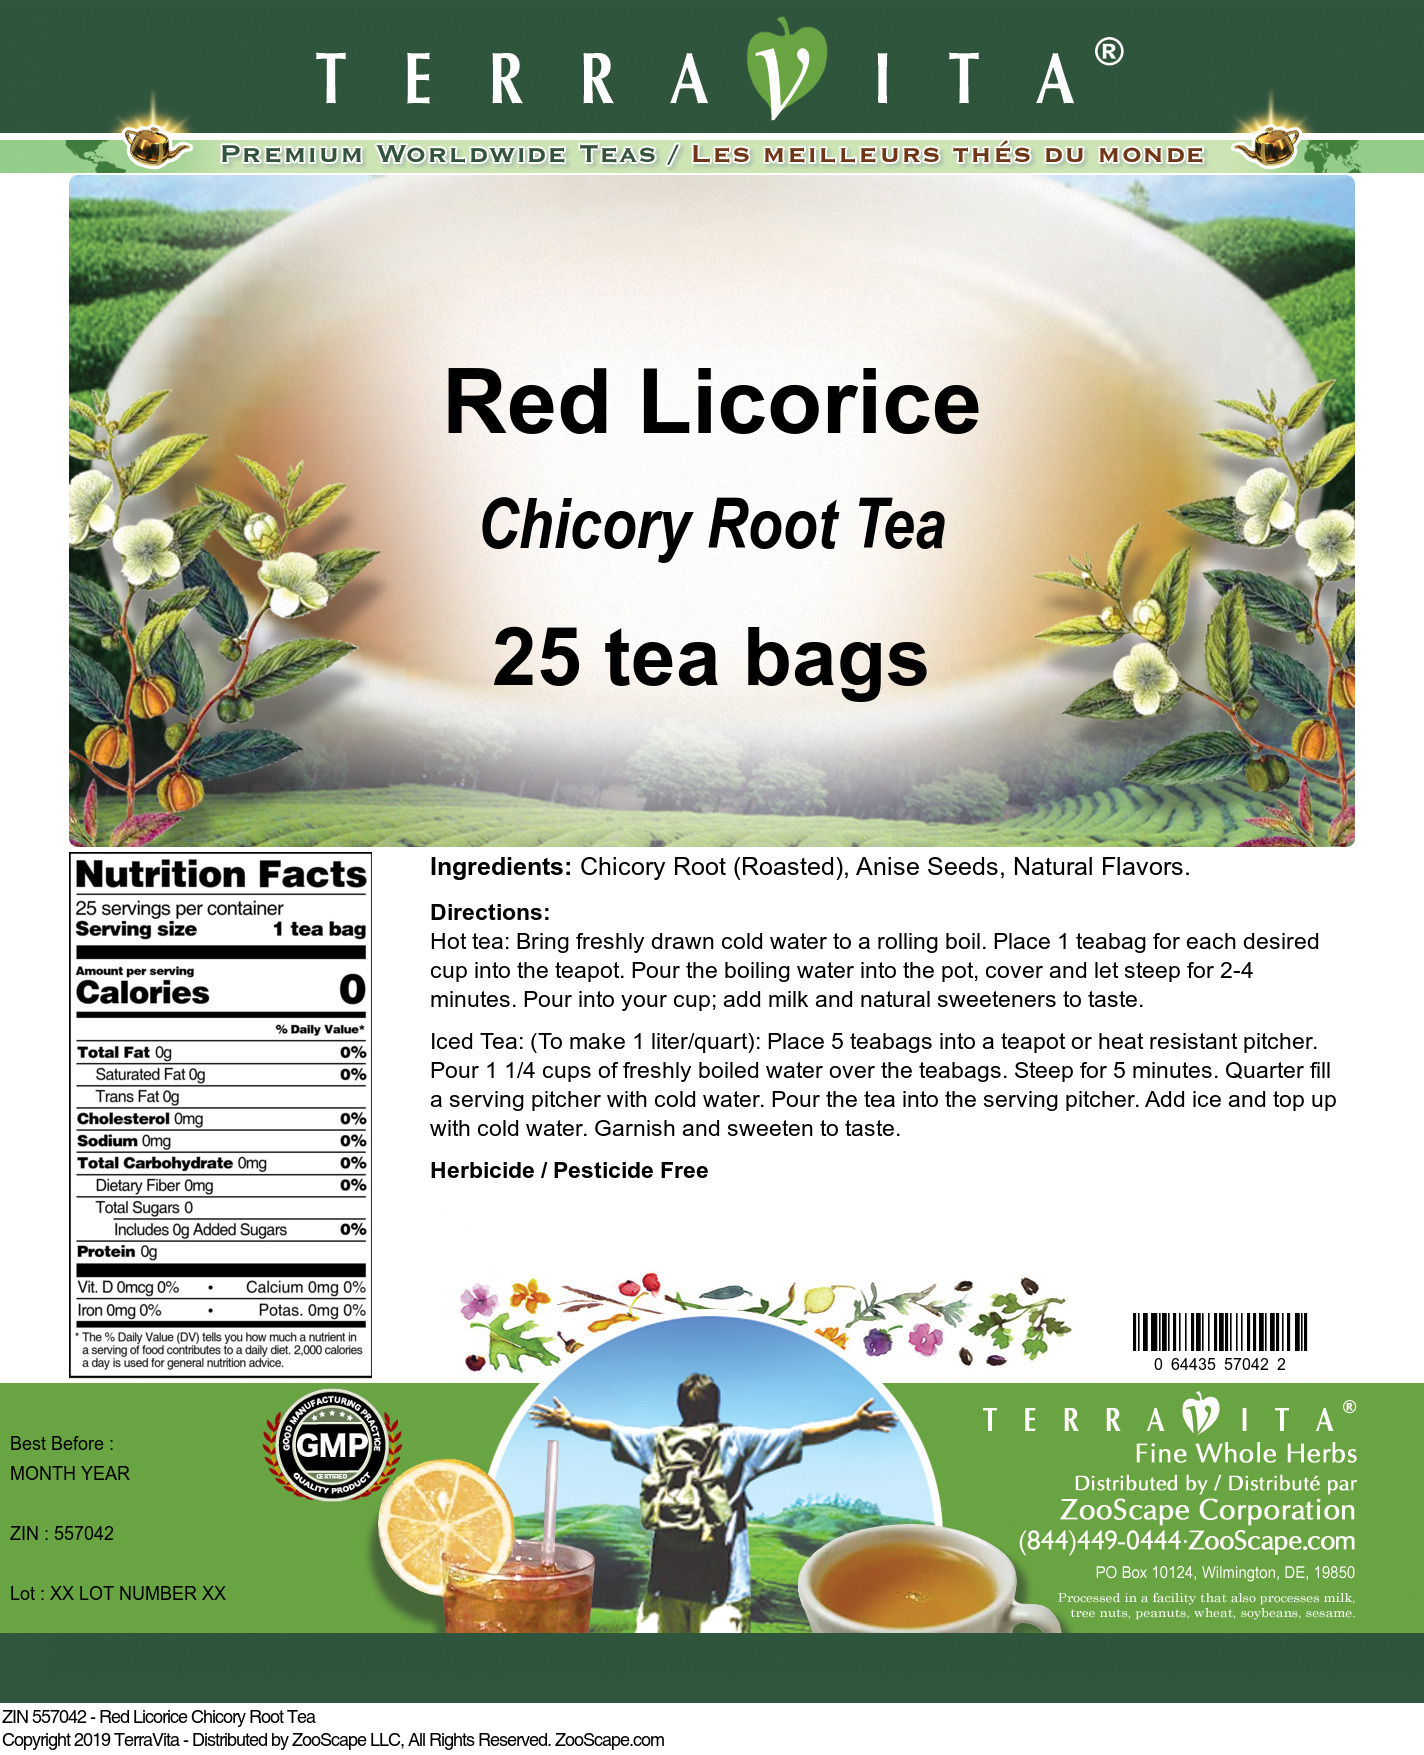 Red Licorice Chicory Root Tea - Label